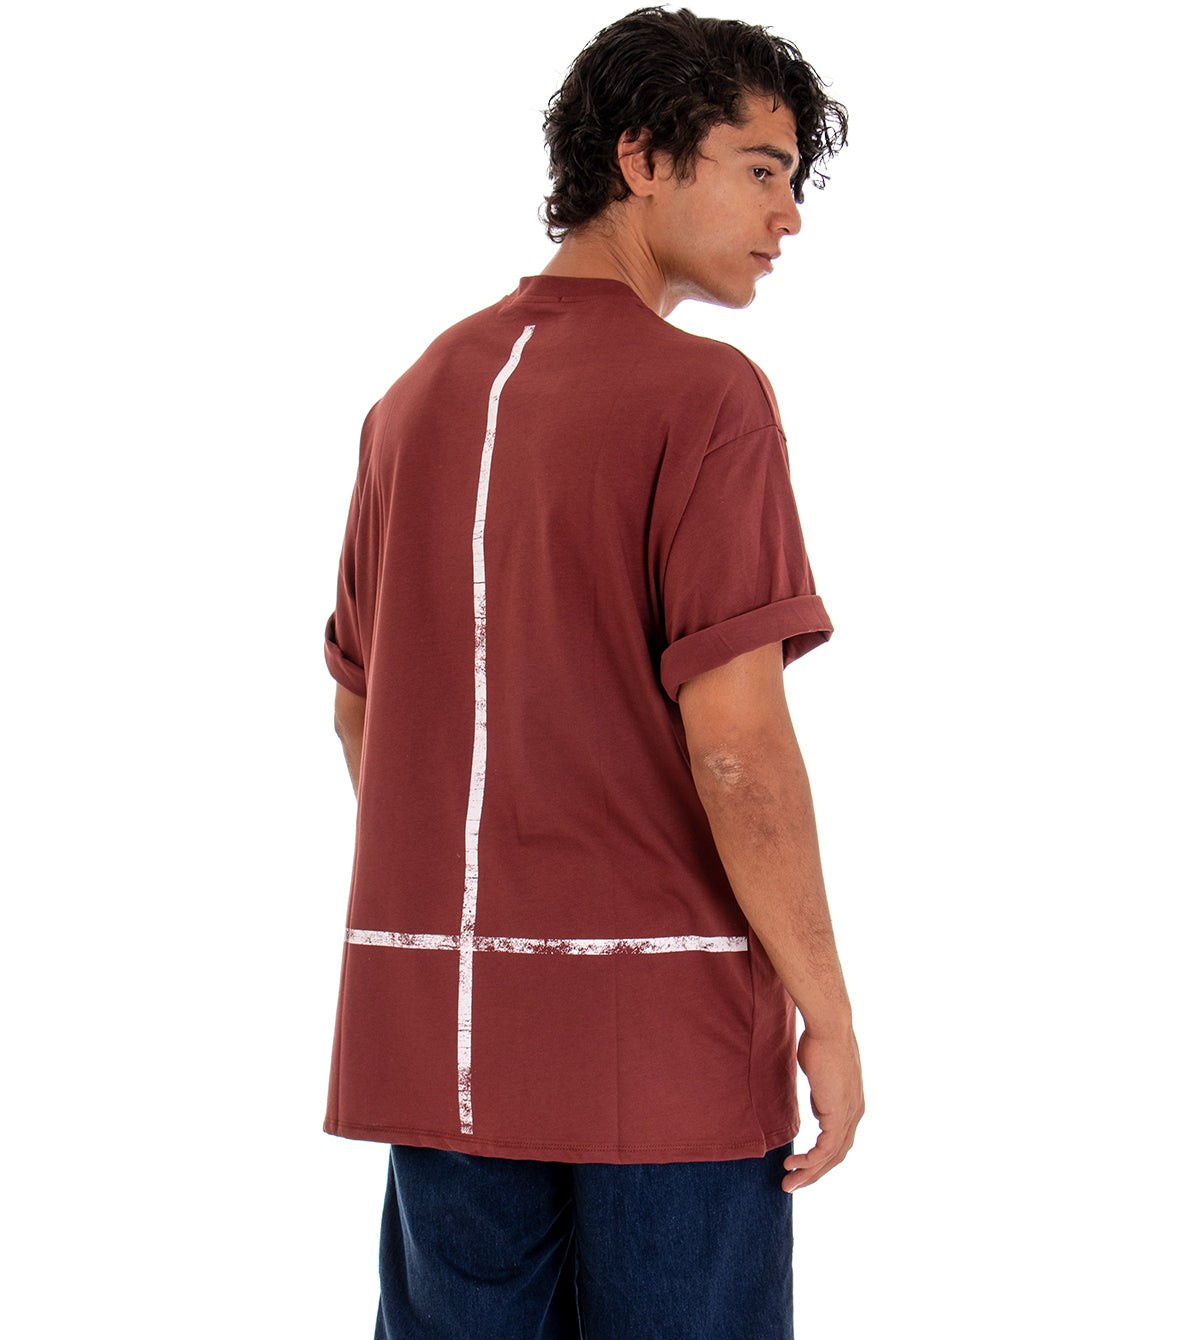 Men's T-shirt Short Sleeve Over Shirt Solid Color Bordeaux Retro Print GIOSAL